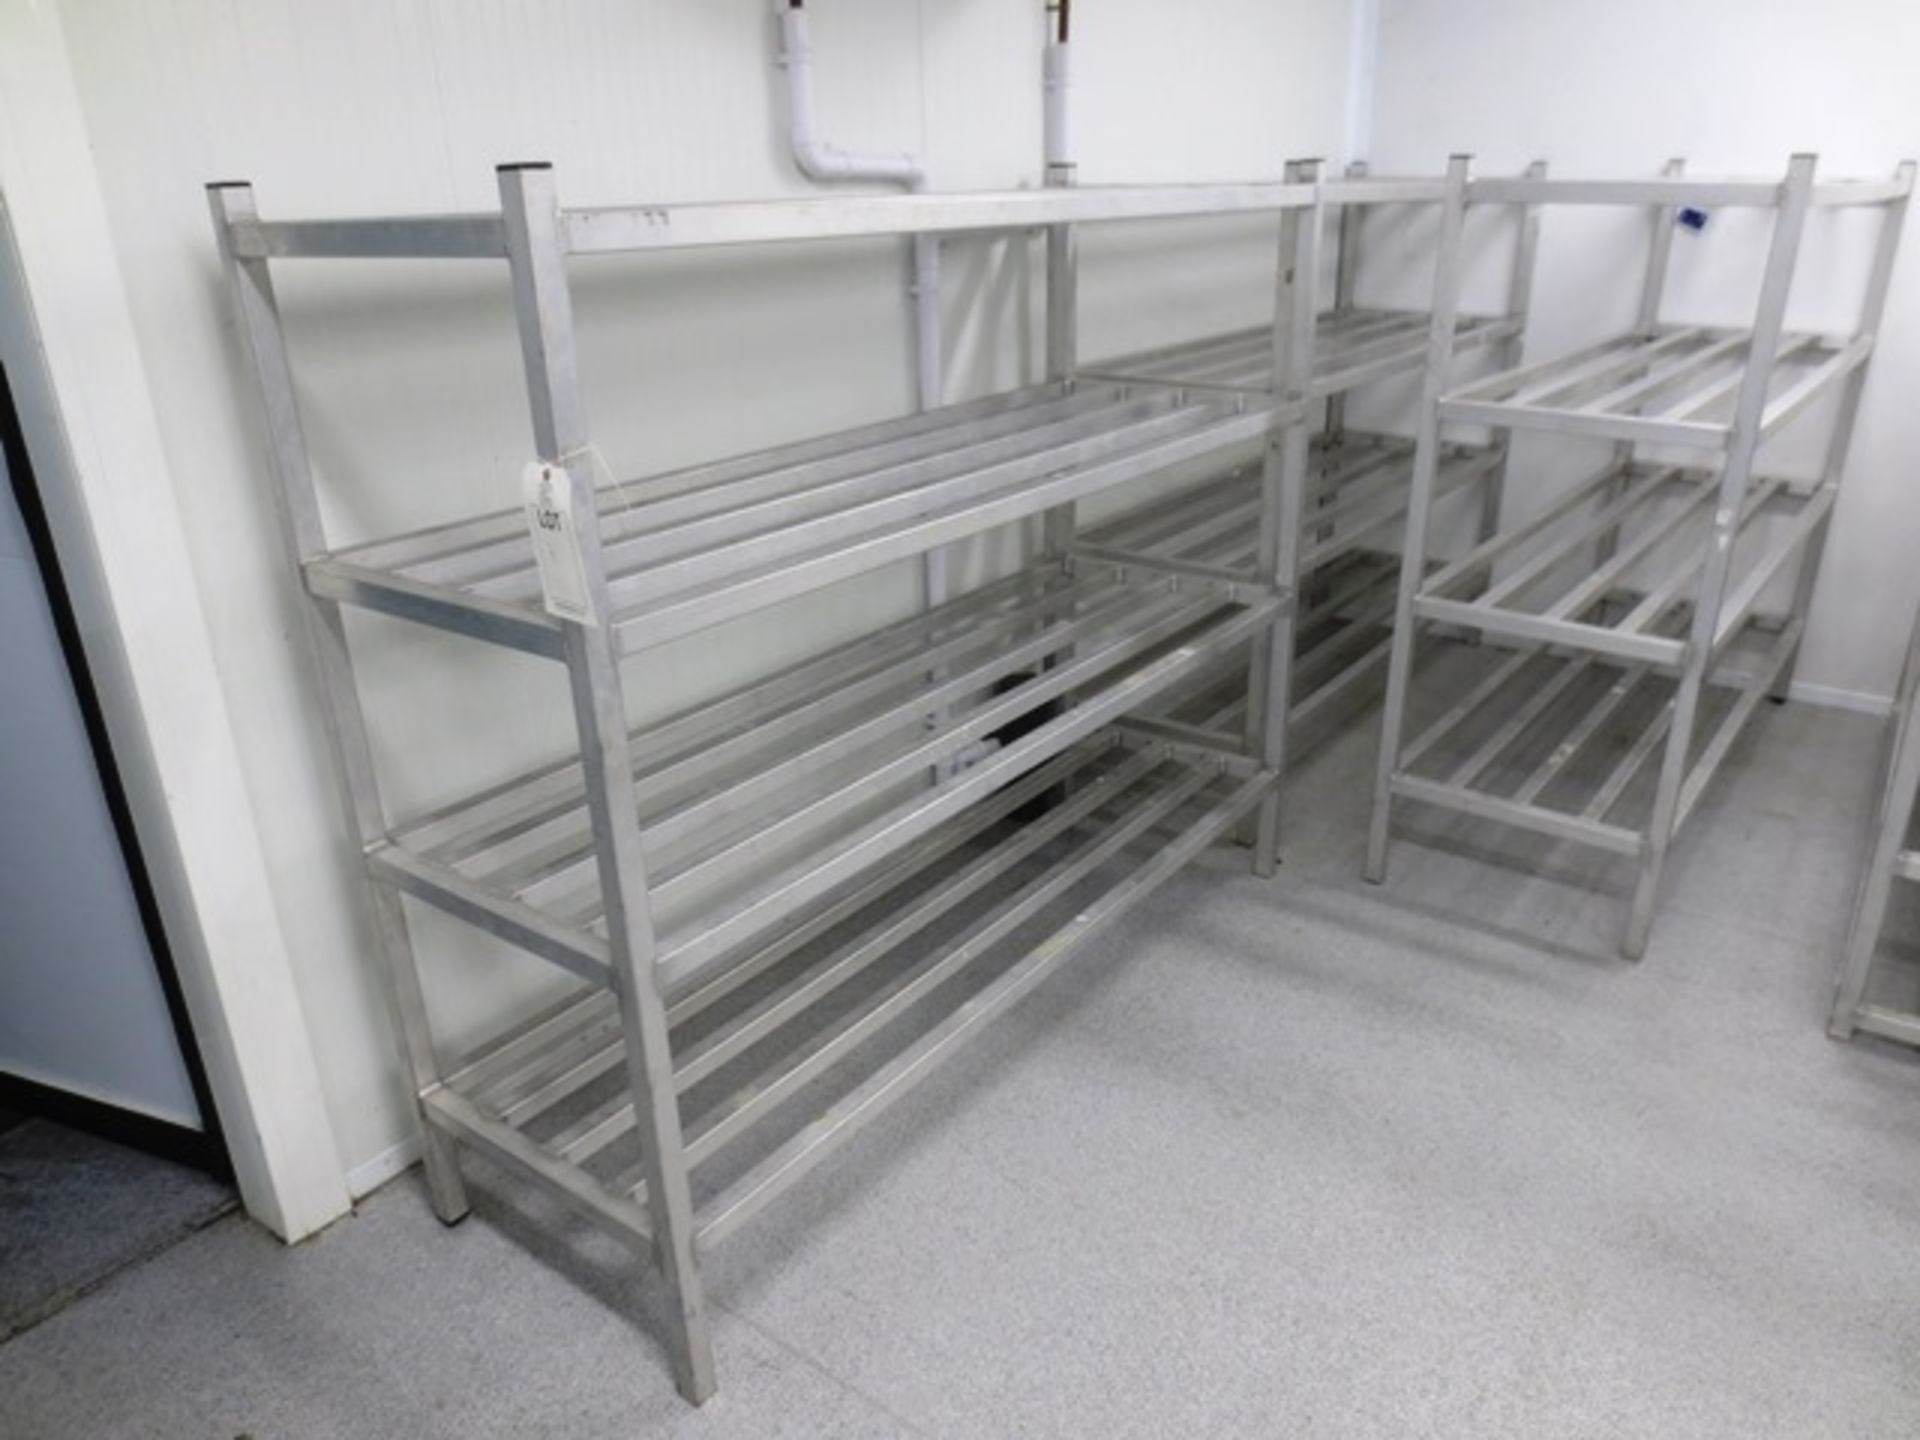 Three stainless steel storage racks, approx 72 x 23.5" each